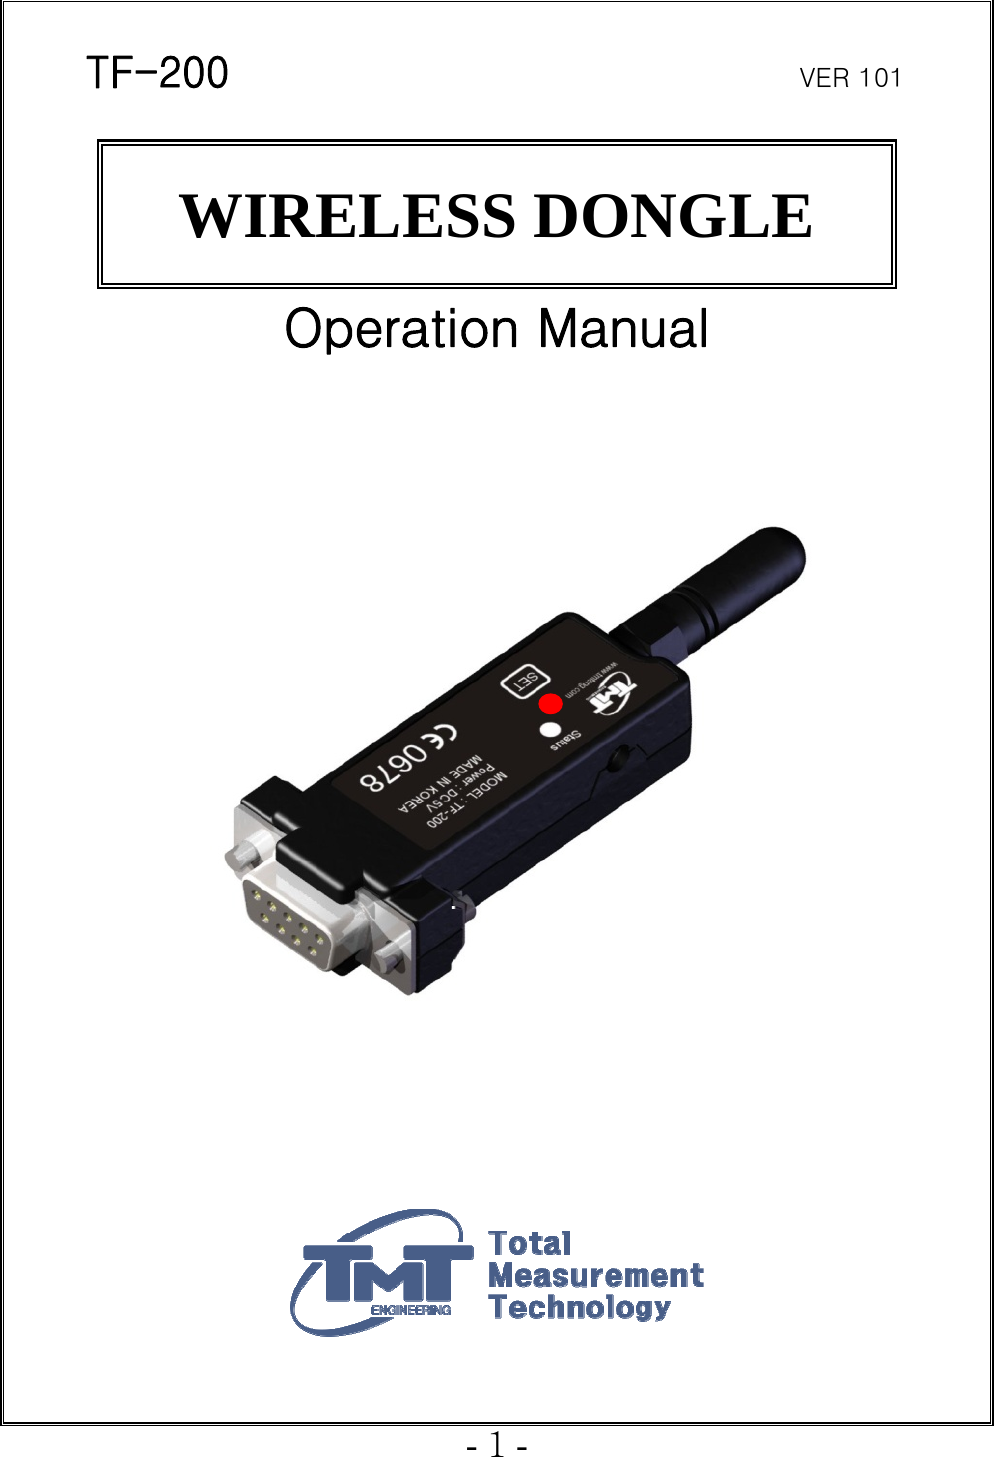  - 1 - TF-200                            VER 101  WIRELESS DONGLE  Operation Manual              